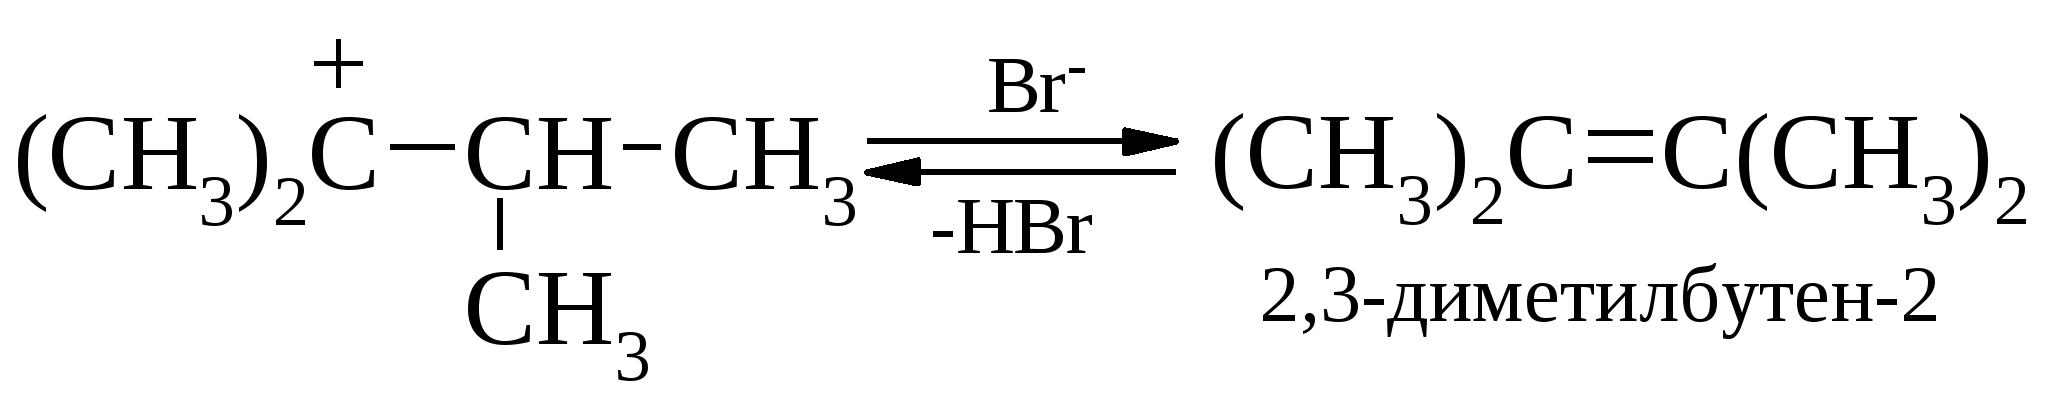 Цис 2 3 диметилбутен 2. 2 3 Диметилбутен 1 формула. Гидратация 2 3 диметилбутен 2. Полимеризация 2 3 диметилбутена 2. 2 3 Диметилбутен 1 и водород.